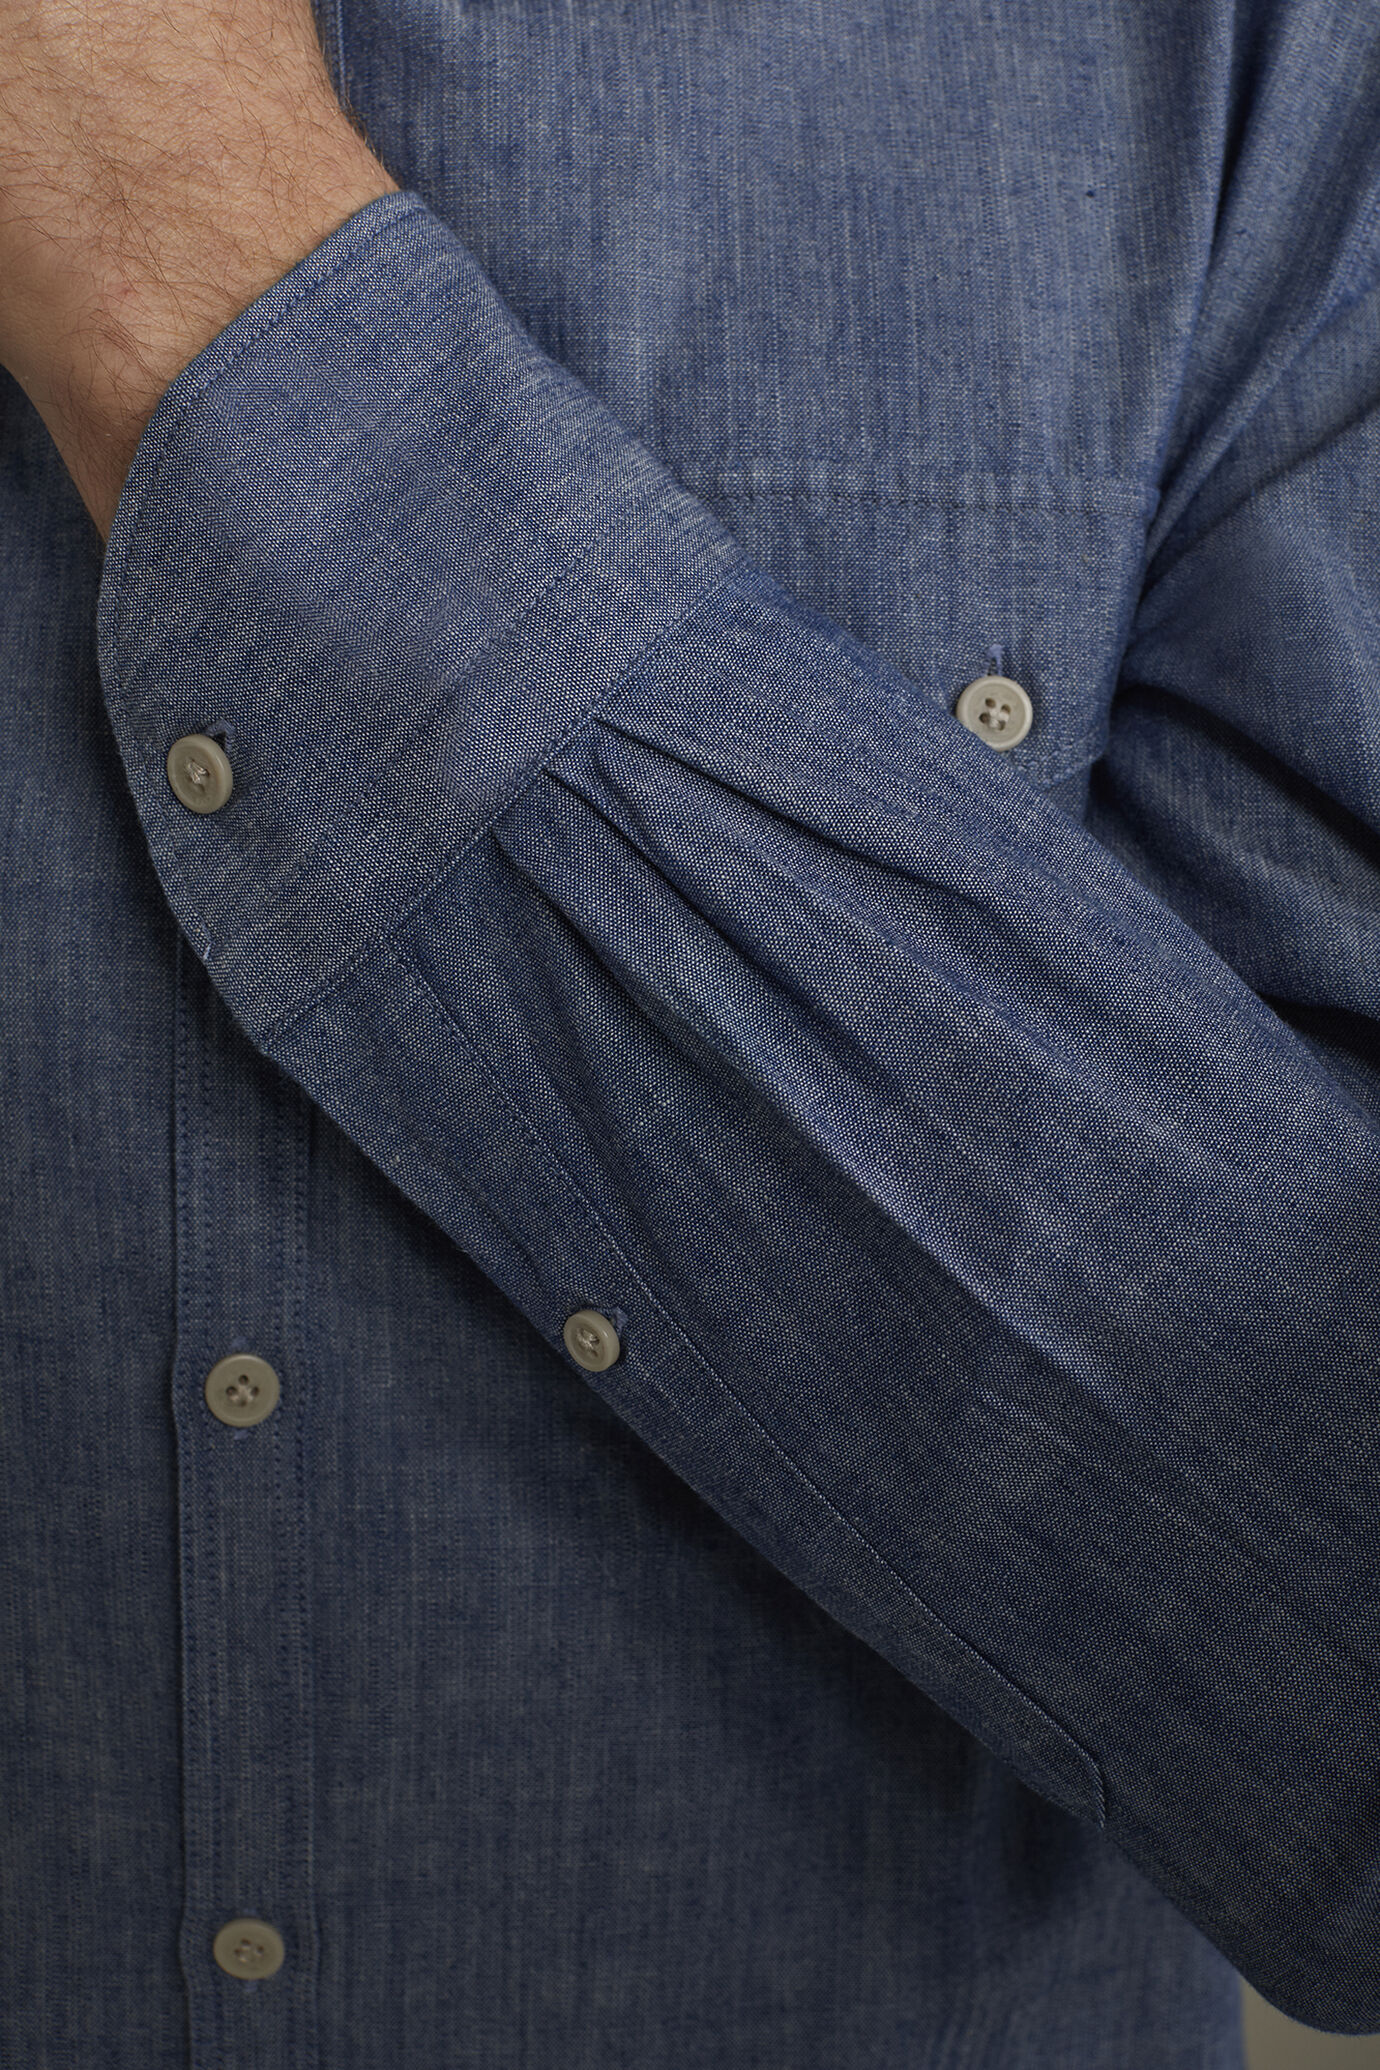 Camicia casual uomo collo classico 100% cotone tessuto denim comfort fit image number 4